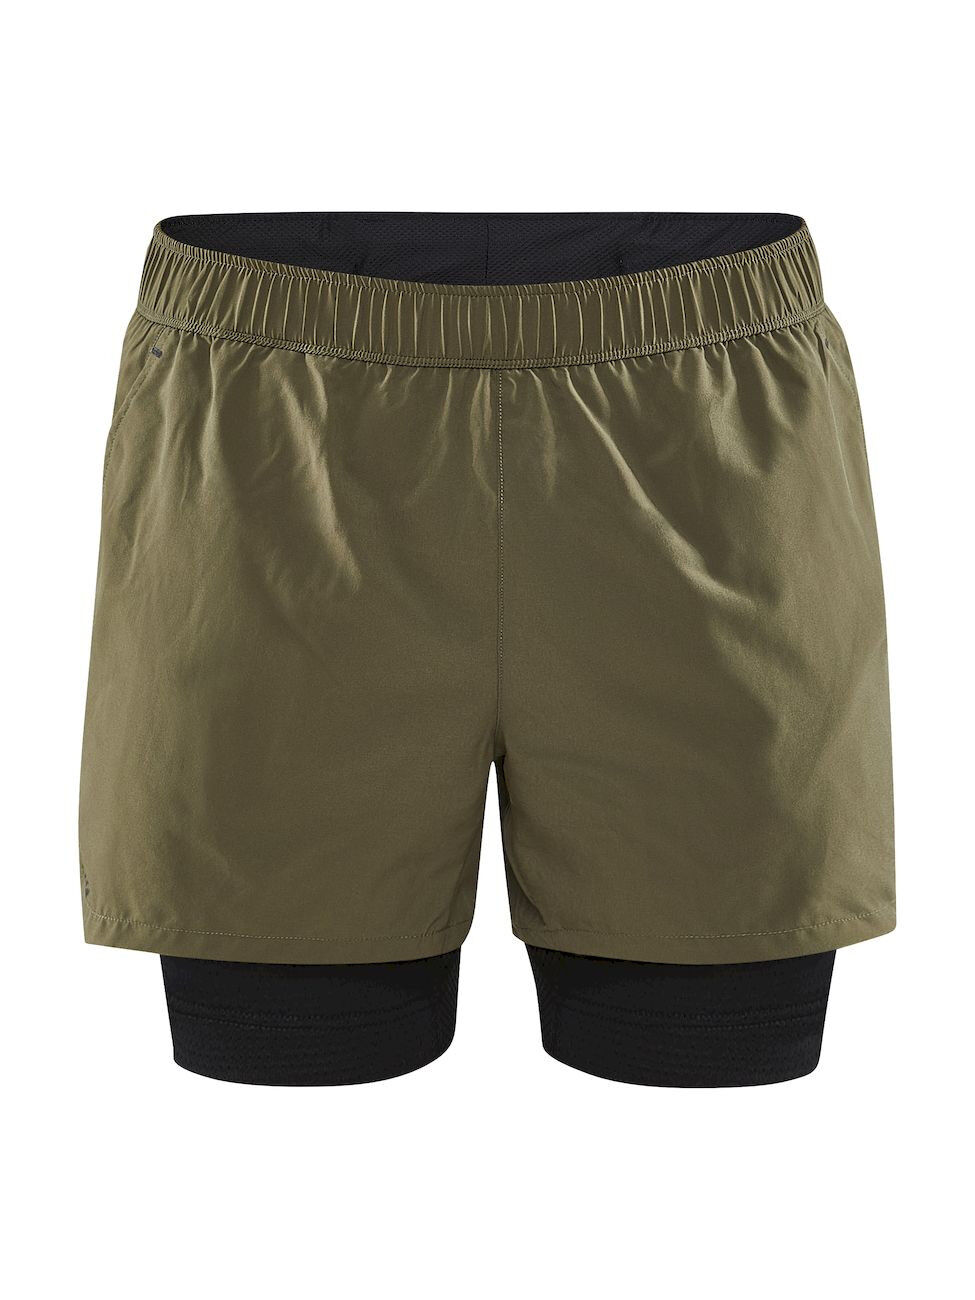 Craft ADV Essence 2-In-1 Stretch Short - Running shorts - Men's